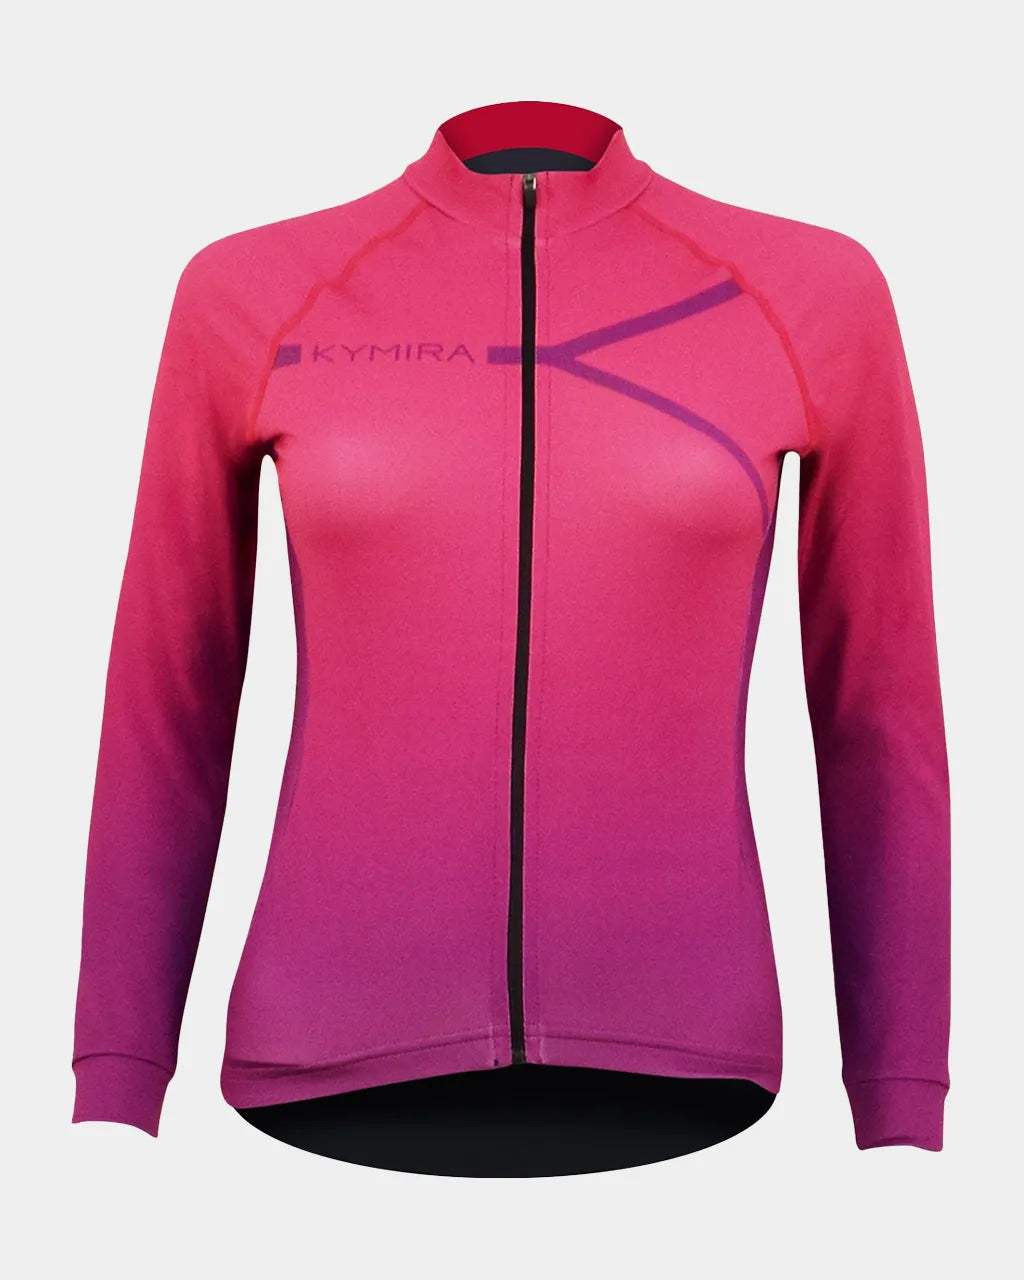 KYMIRA PRO2 Infrared Women's Long Sleeve Cycling Jersey